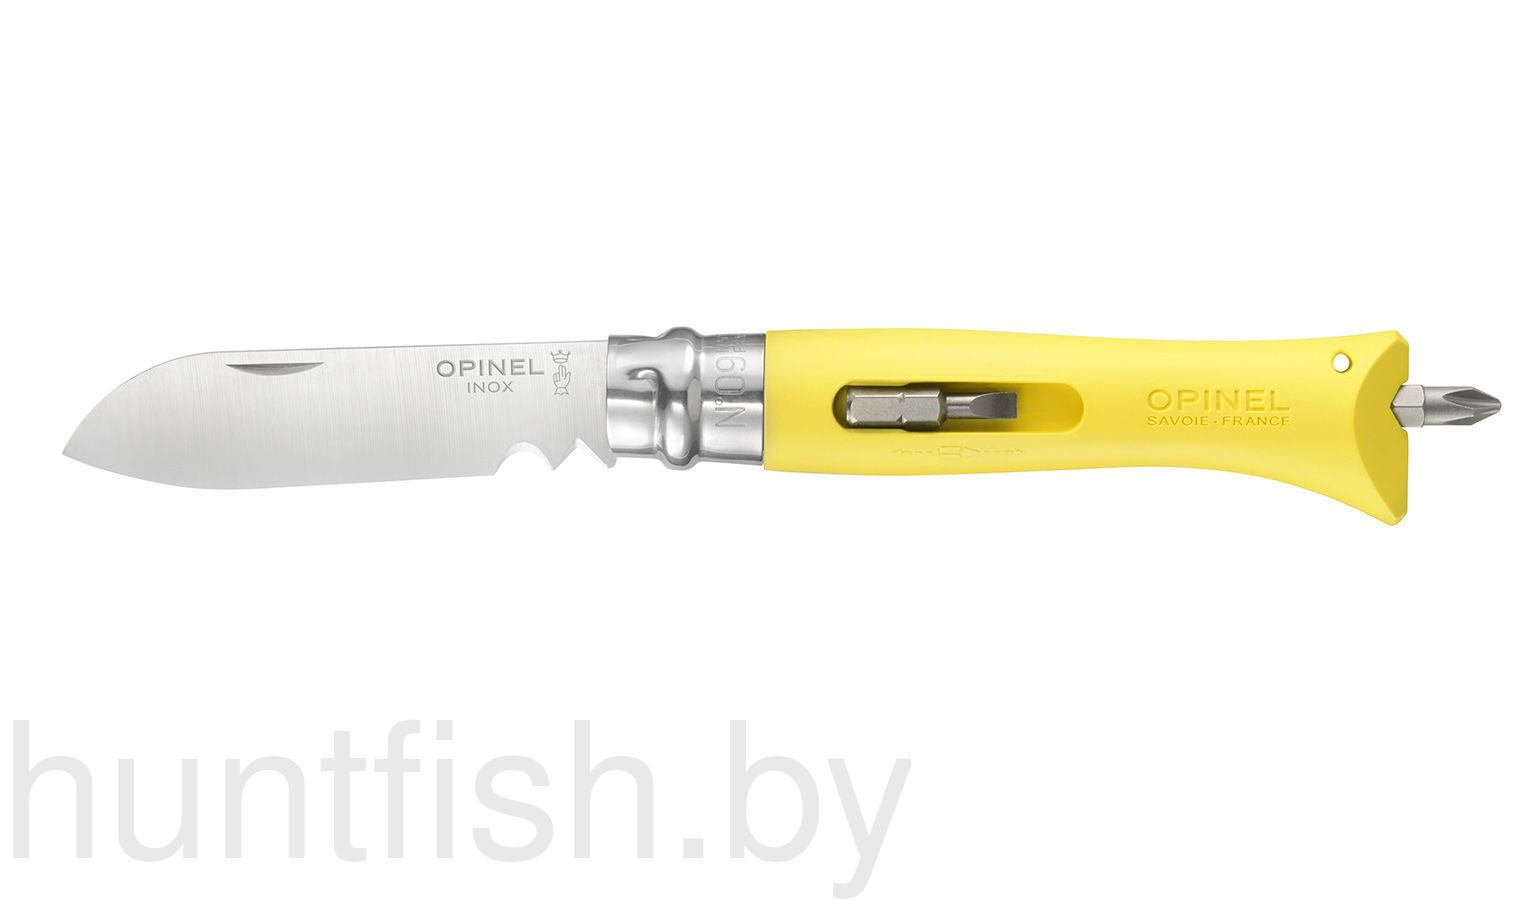 Нож Opinel N°09 DIY нержавеющая сталь, пластик, цвет - желтый, сменные биты (4 шт./уп.)